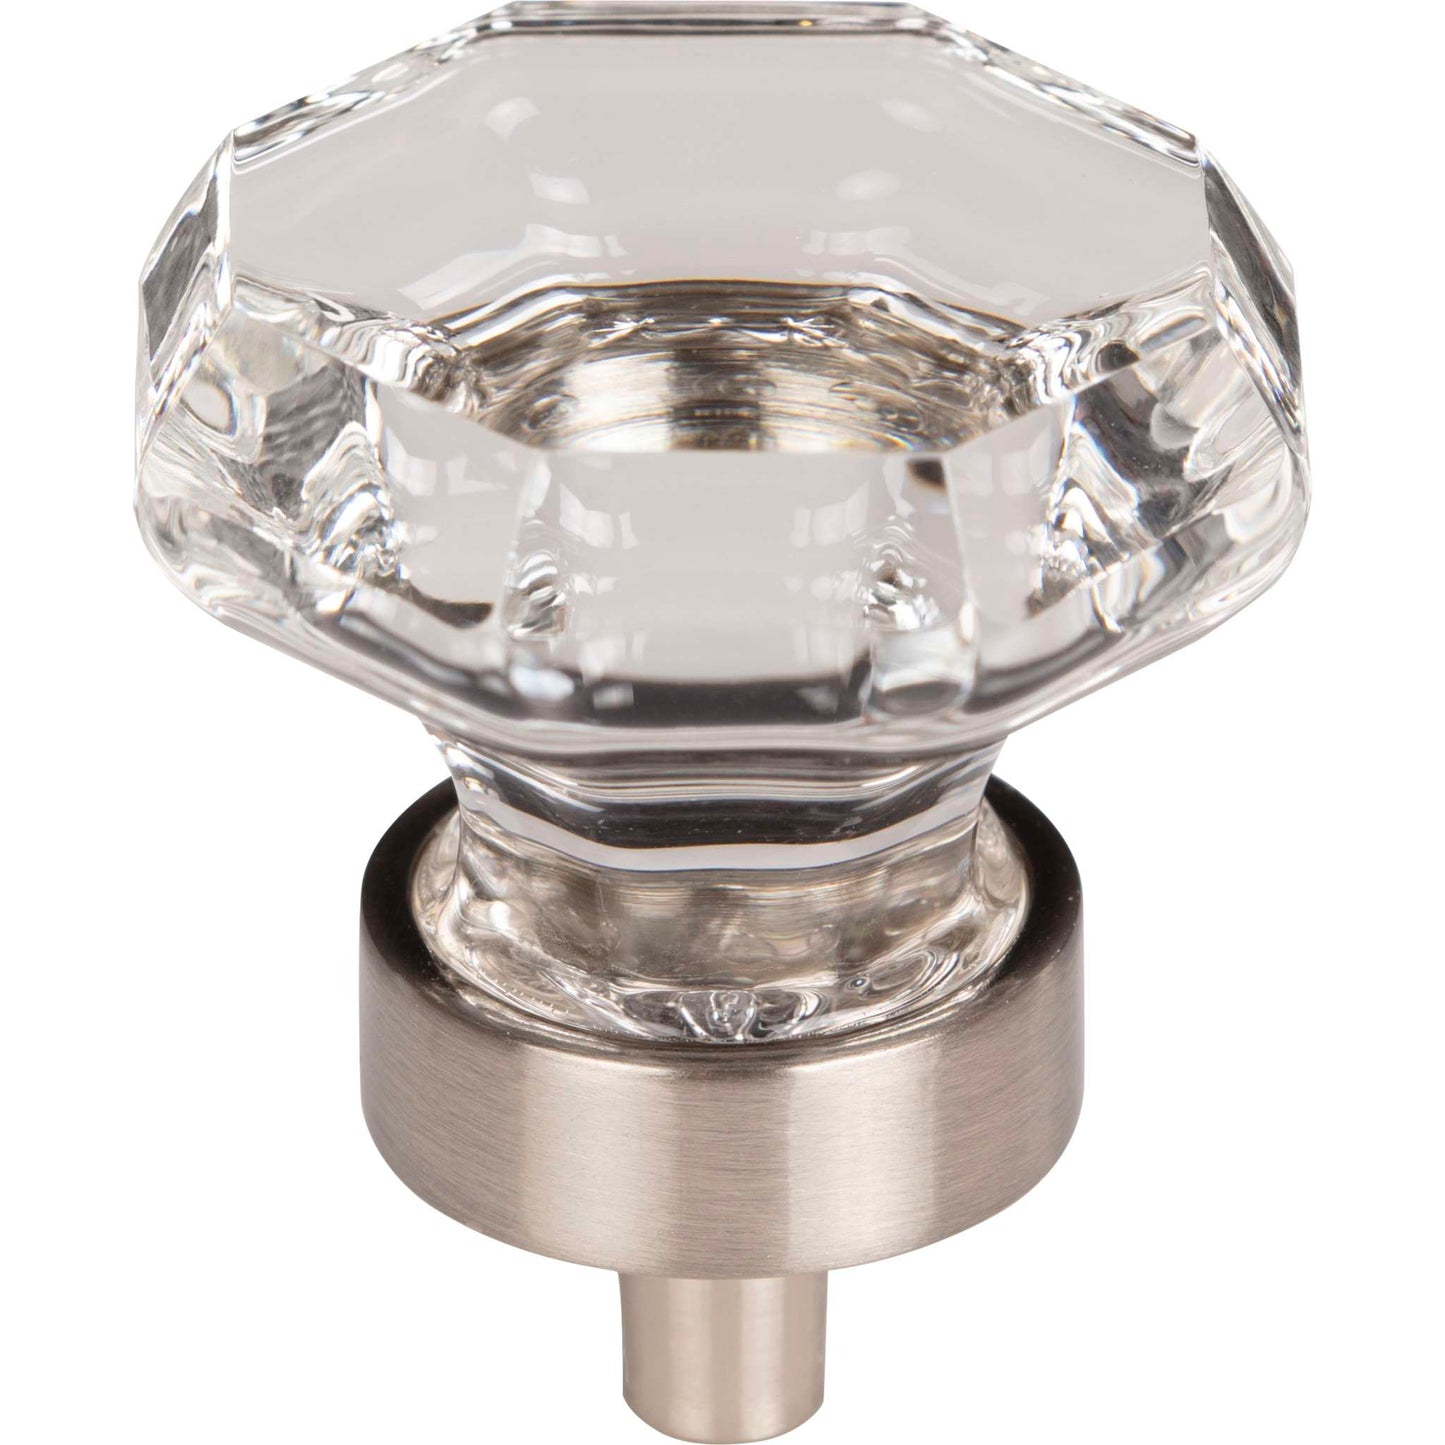 Top Knobs - Clear Octagon Crystal Knob